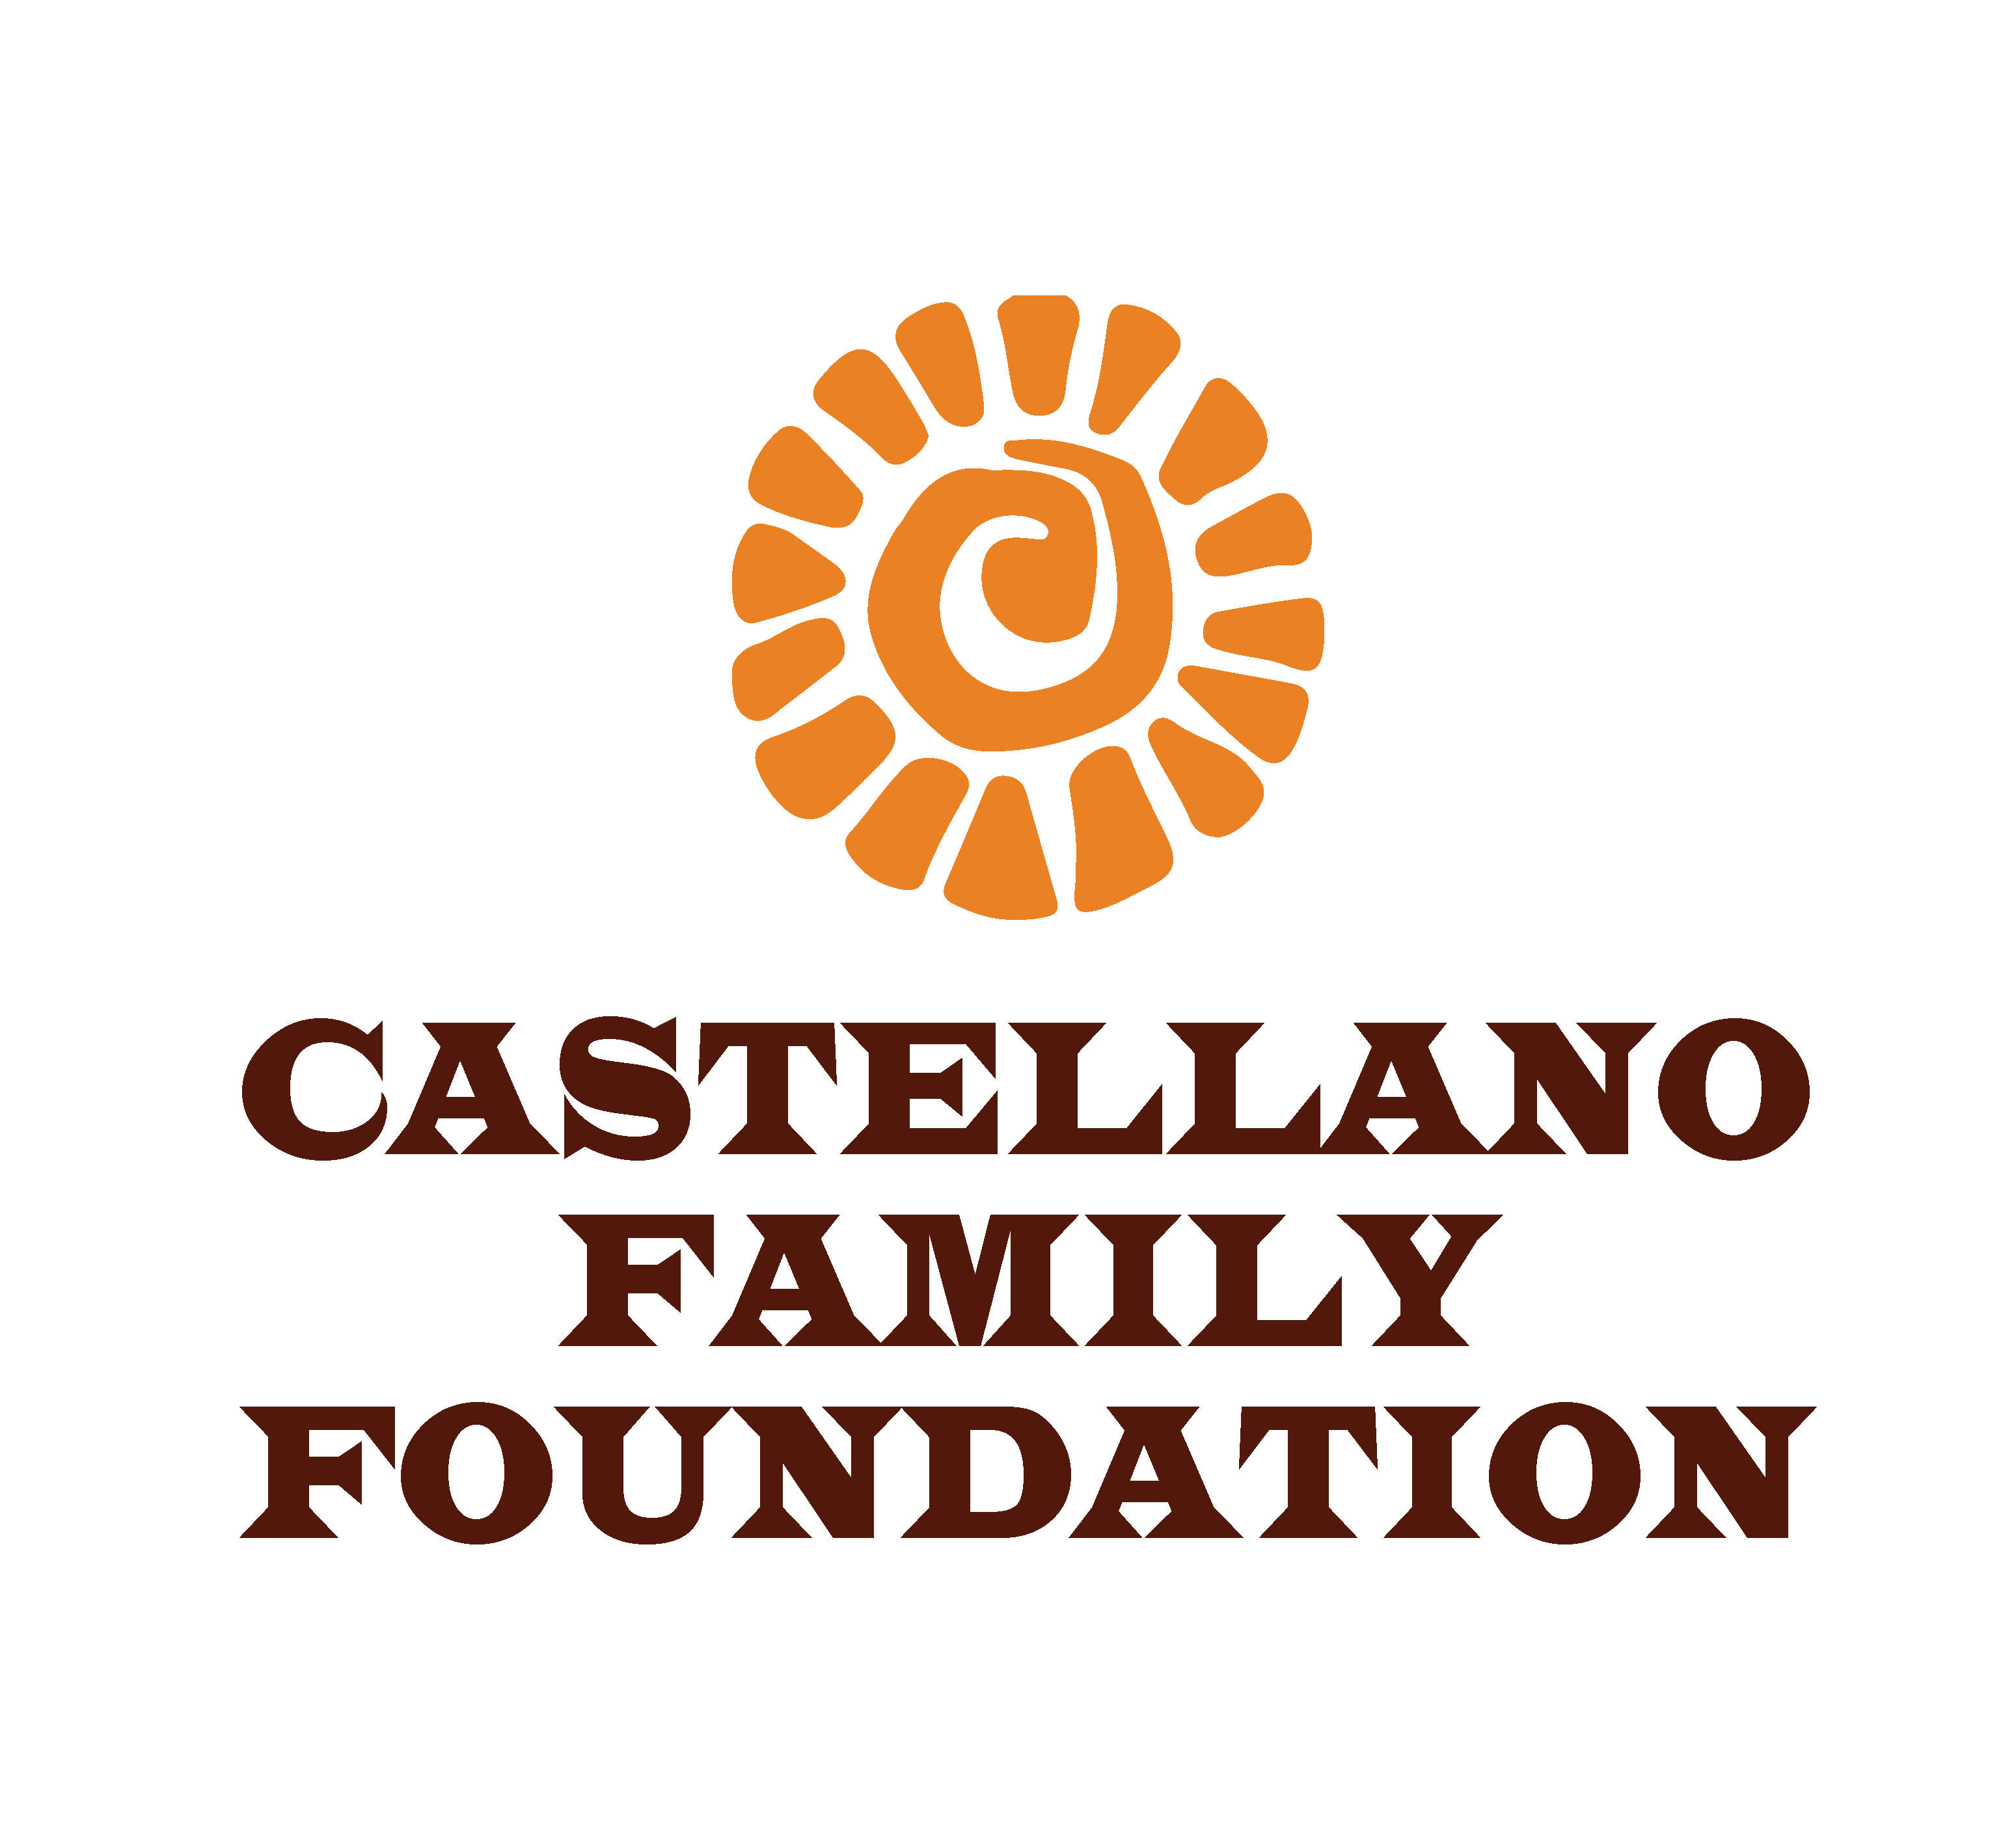 The Castellano Family Foundation